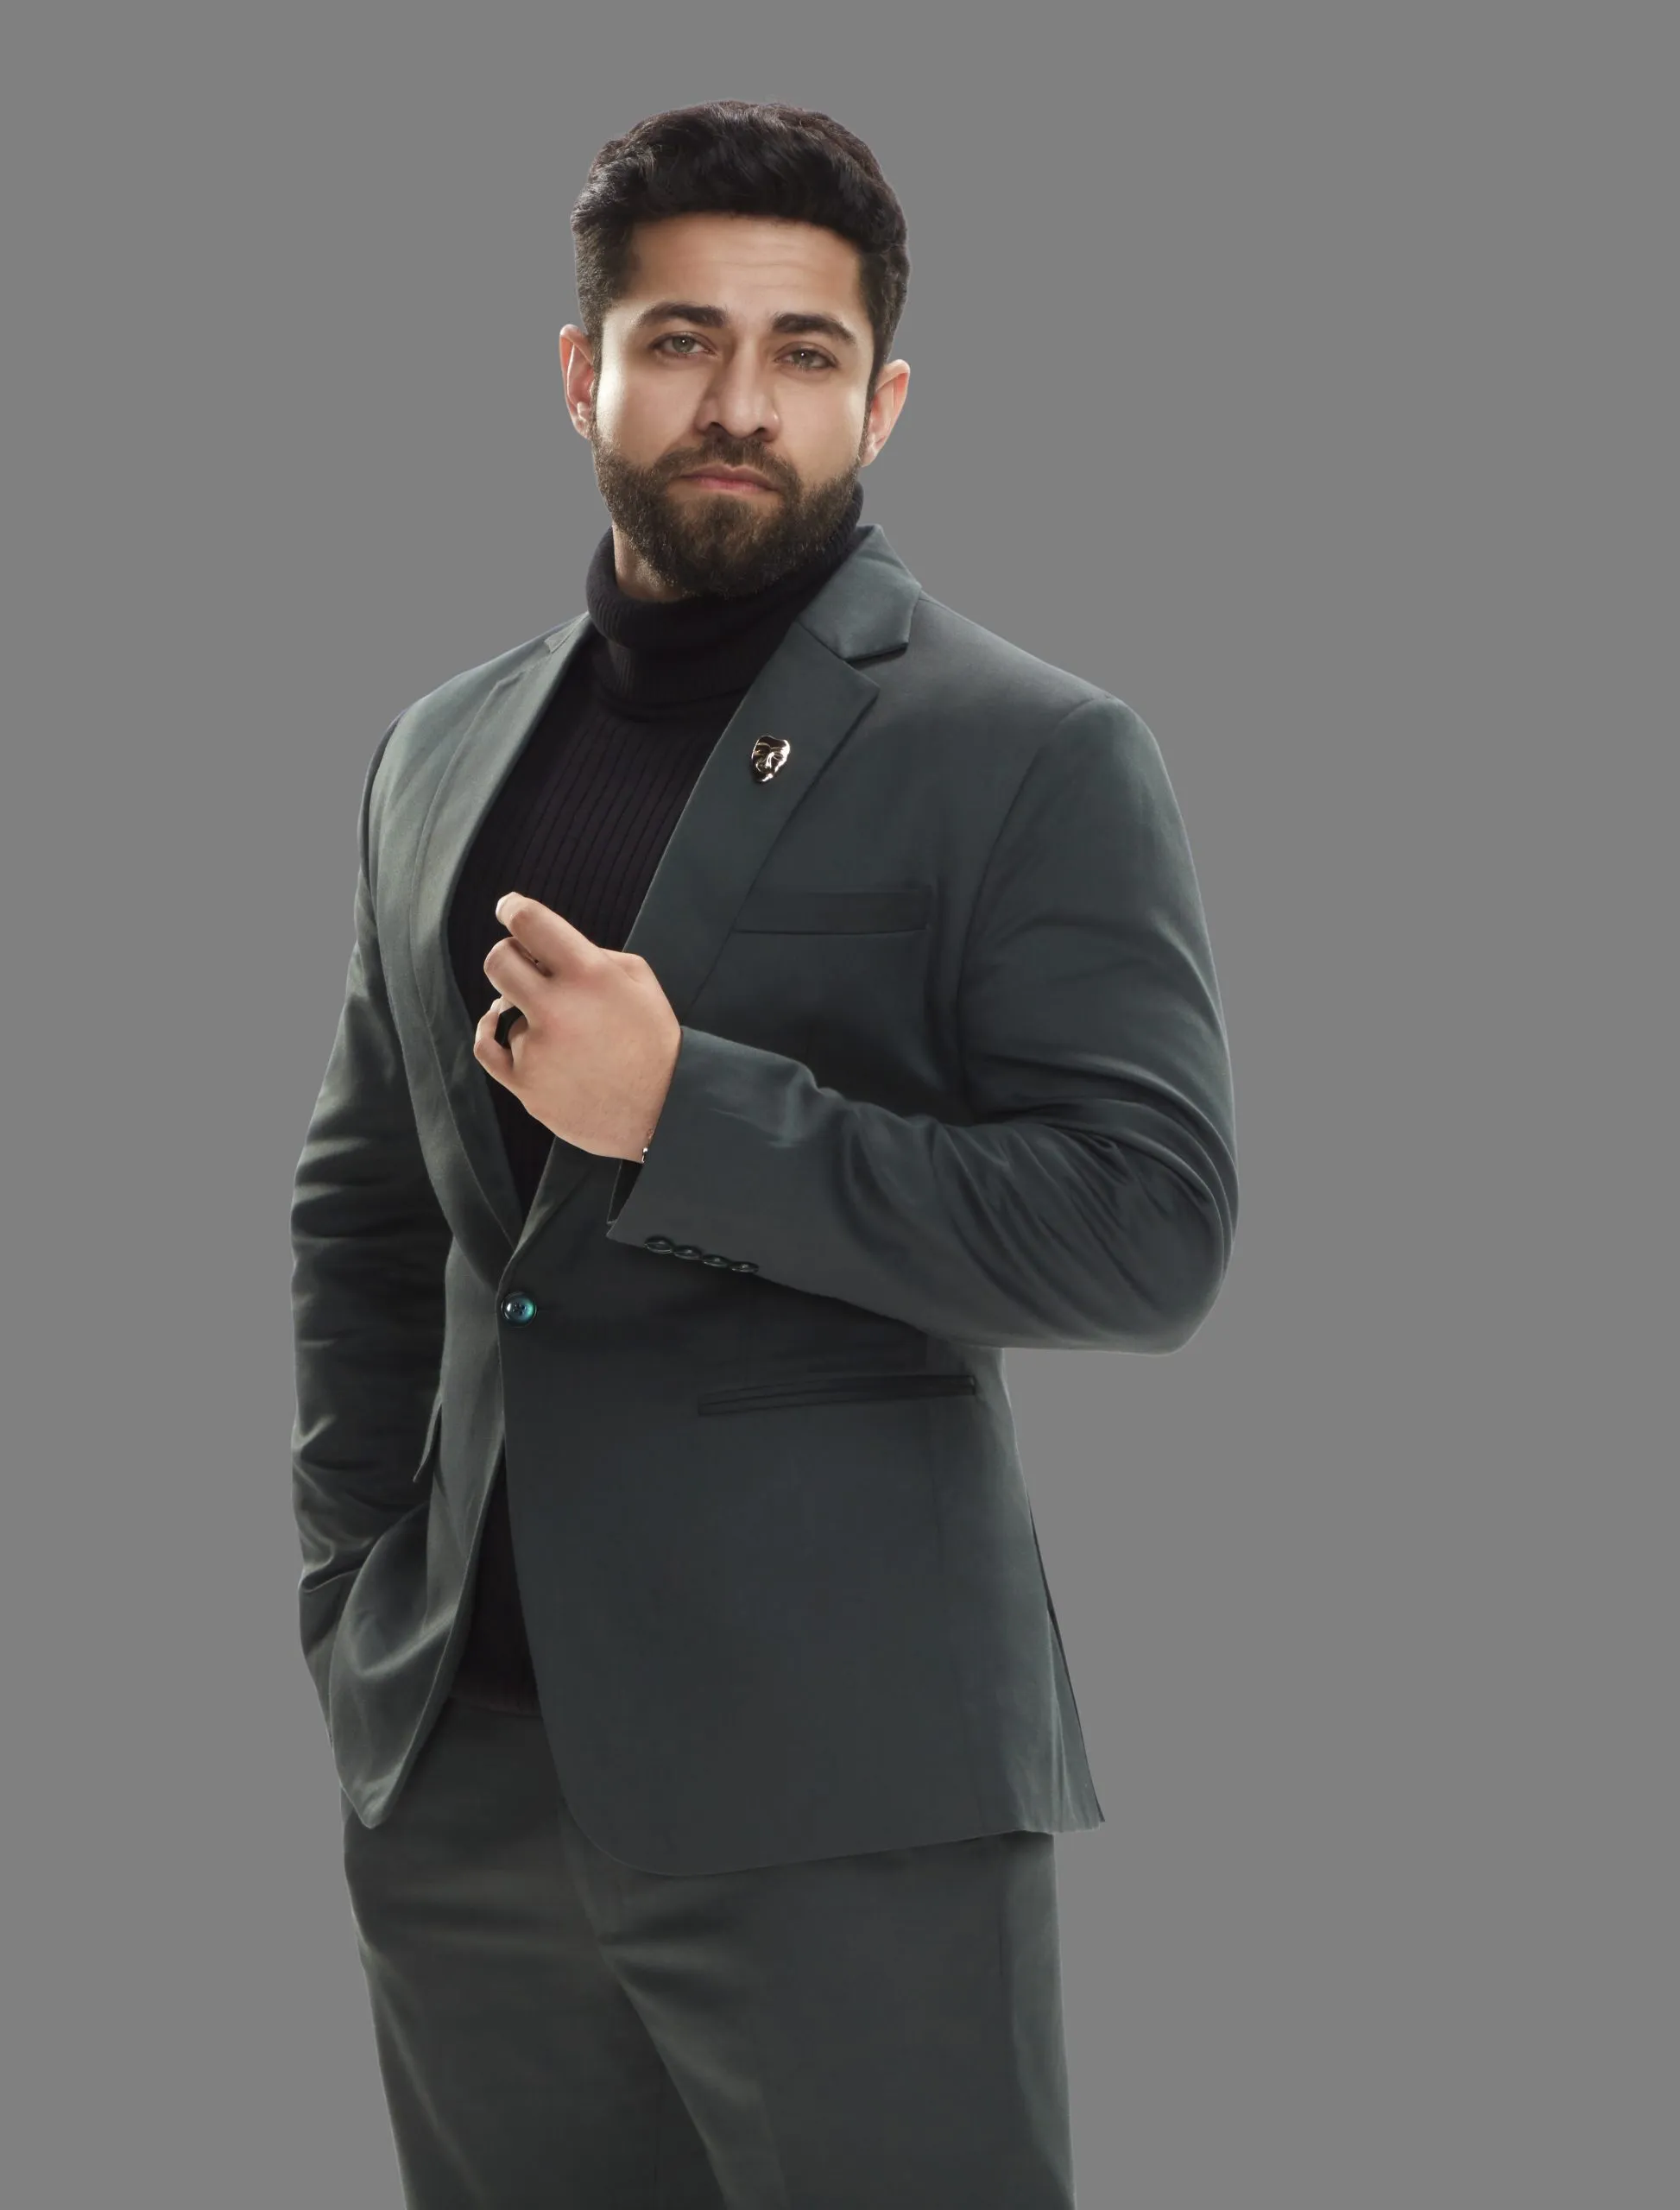 Mahir Pandhi as DJ from Sony SAB's Vanshaj